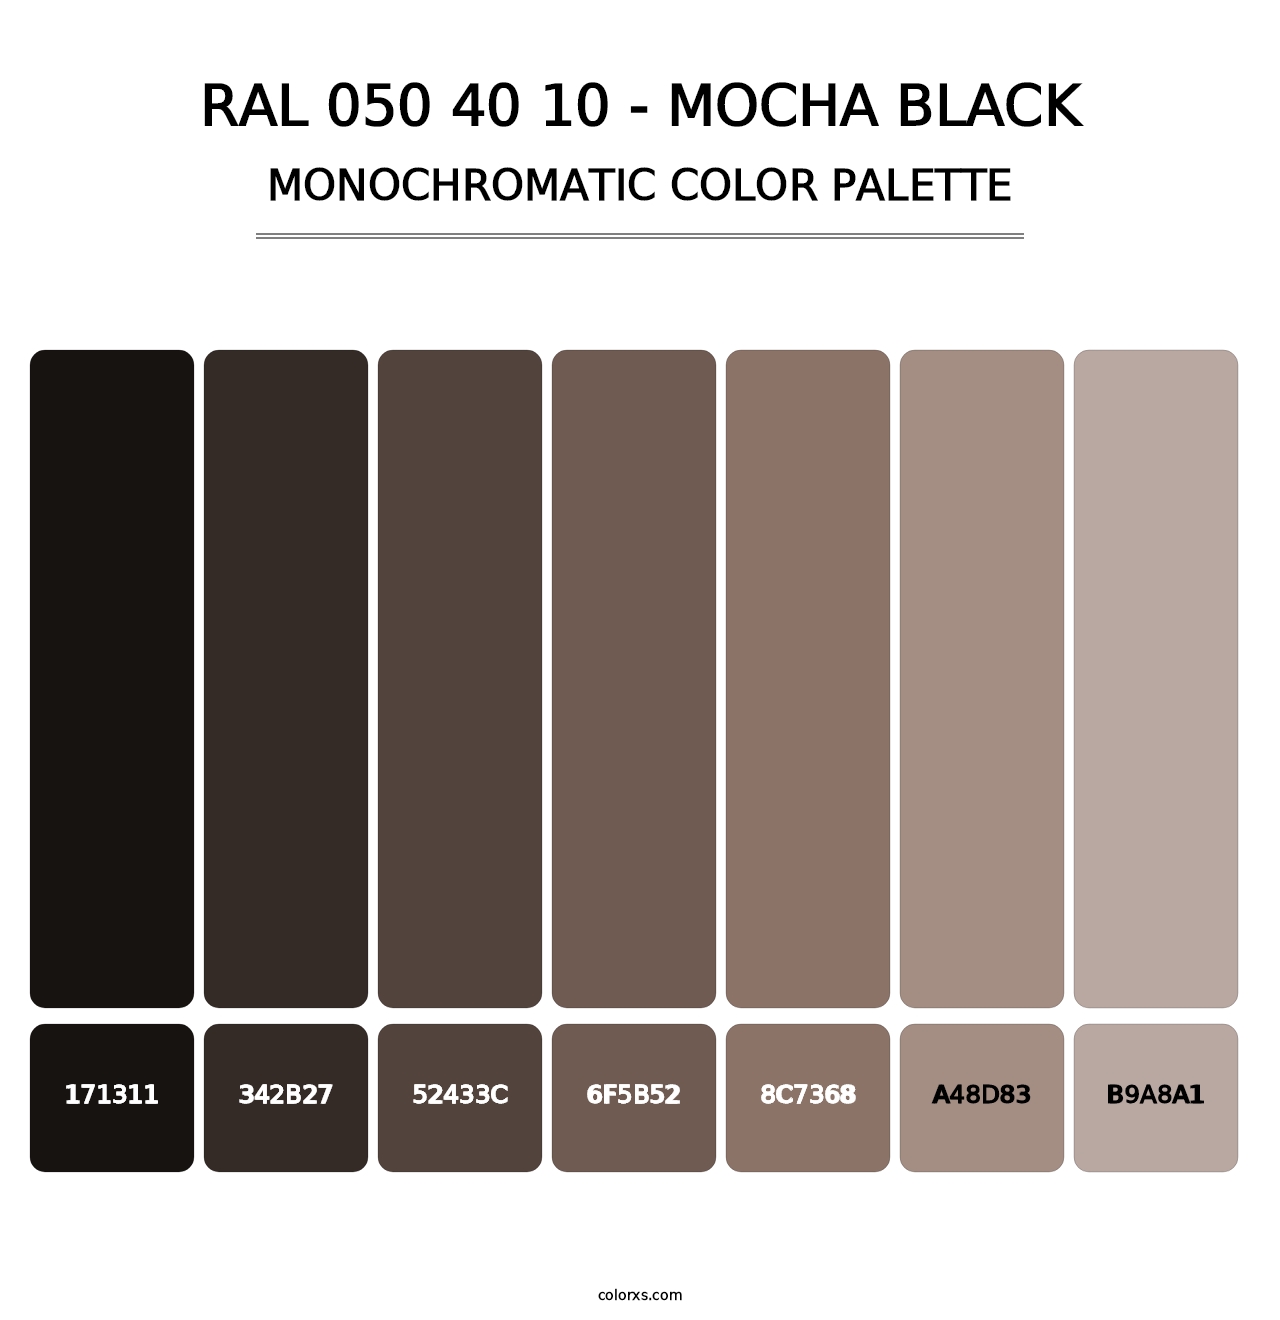 RAL 050 40 10 - Mocha Black - Monochromatic Color Palette